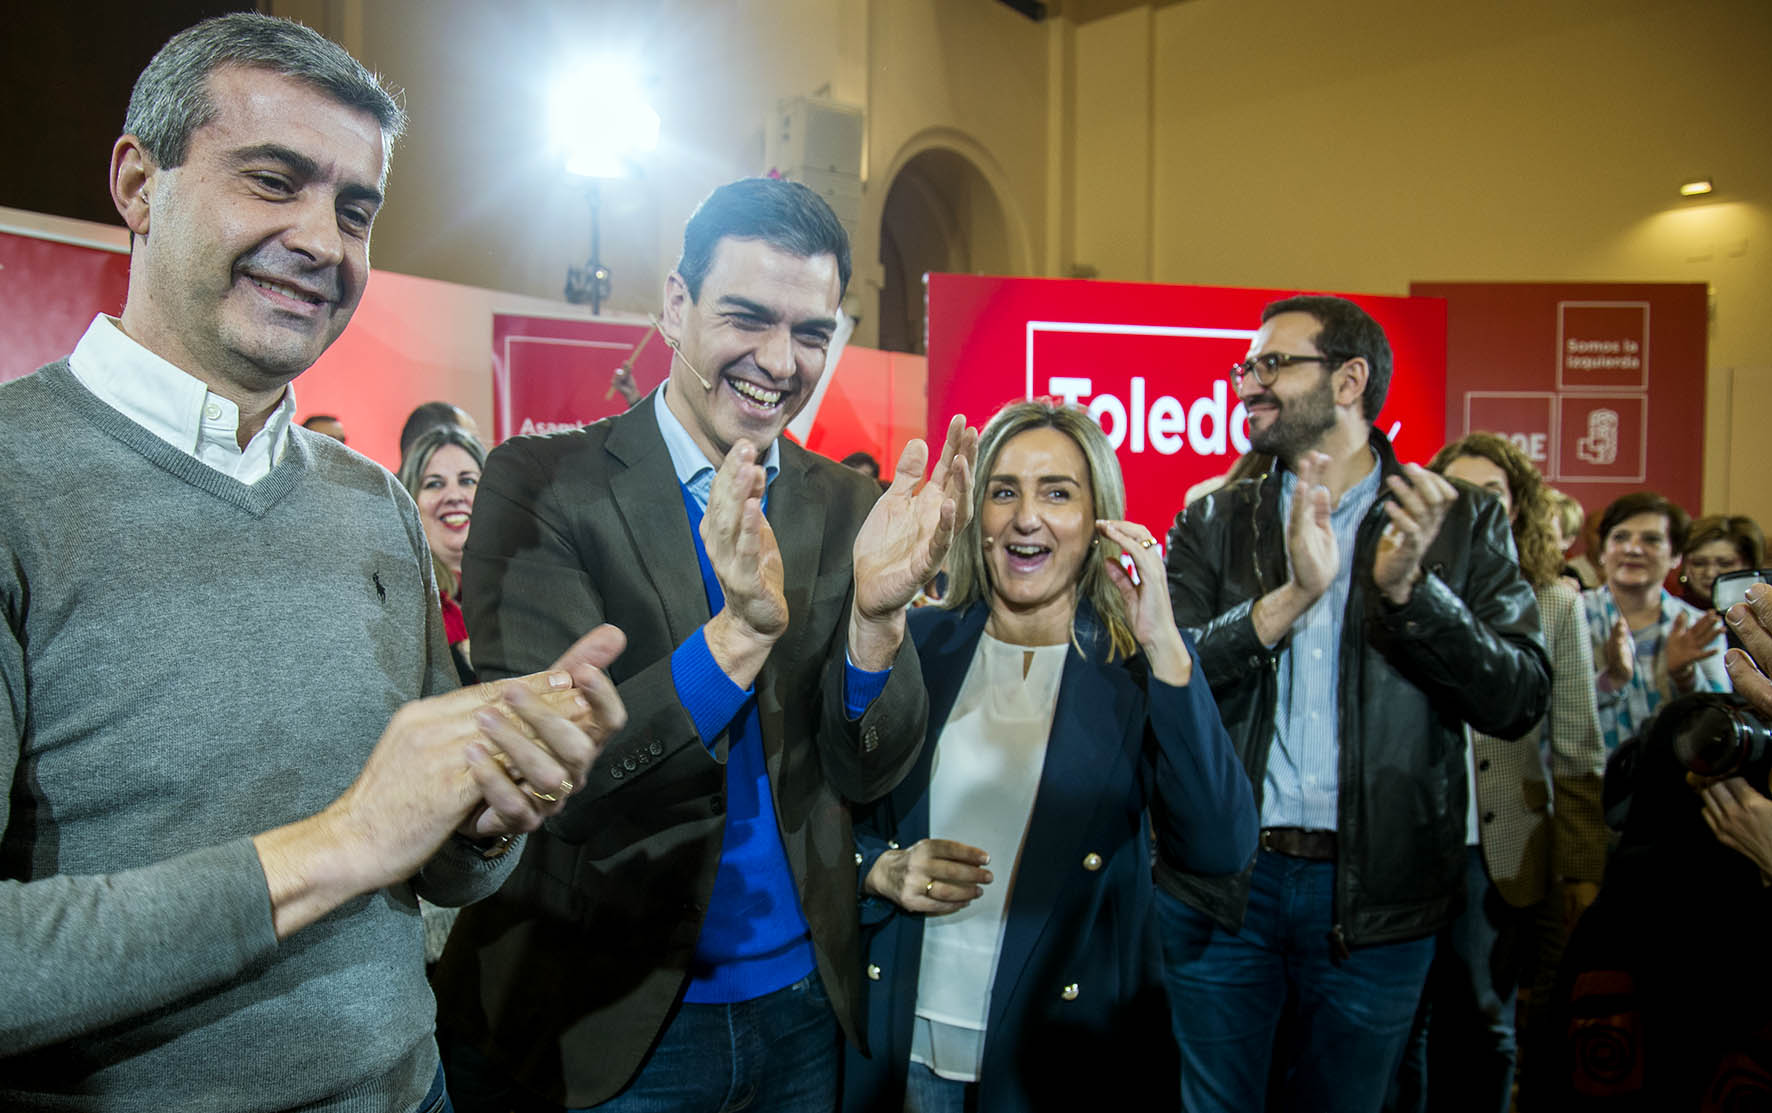 De izquierda a derecha, Álvaro Gutiérrez, Pedro Sánchez, Milagros Tolón y Álvaro Gutiérrez.